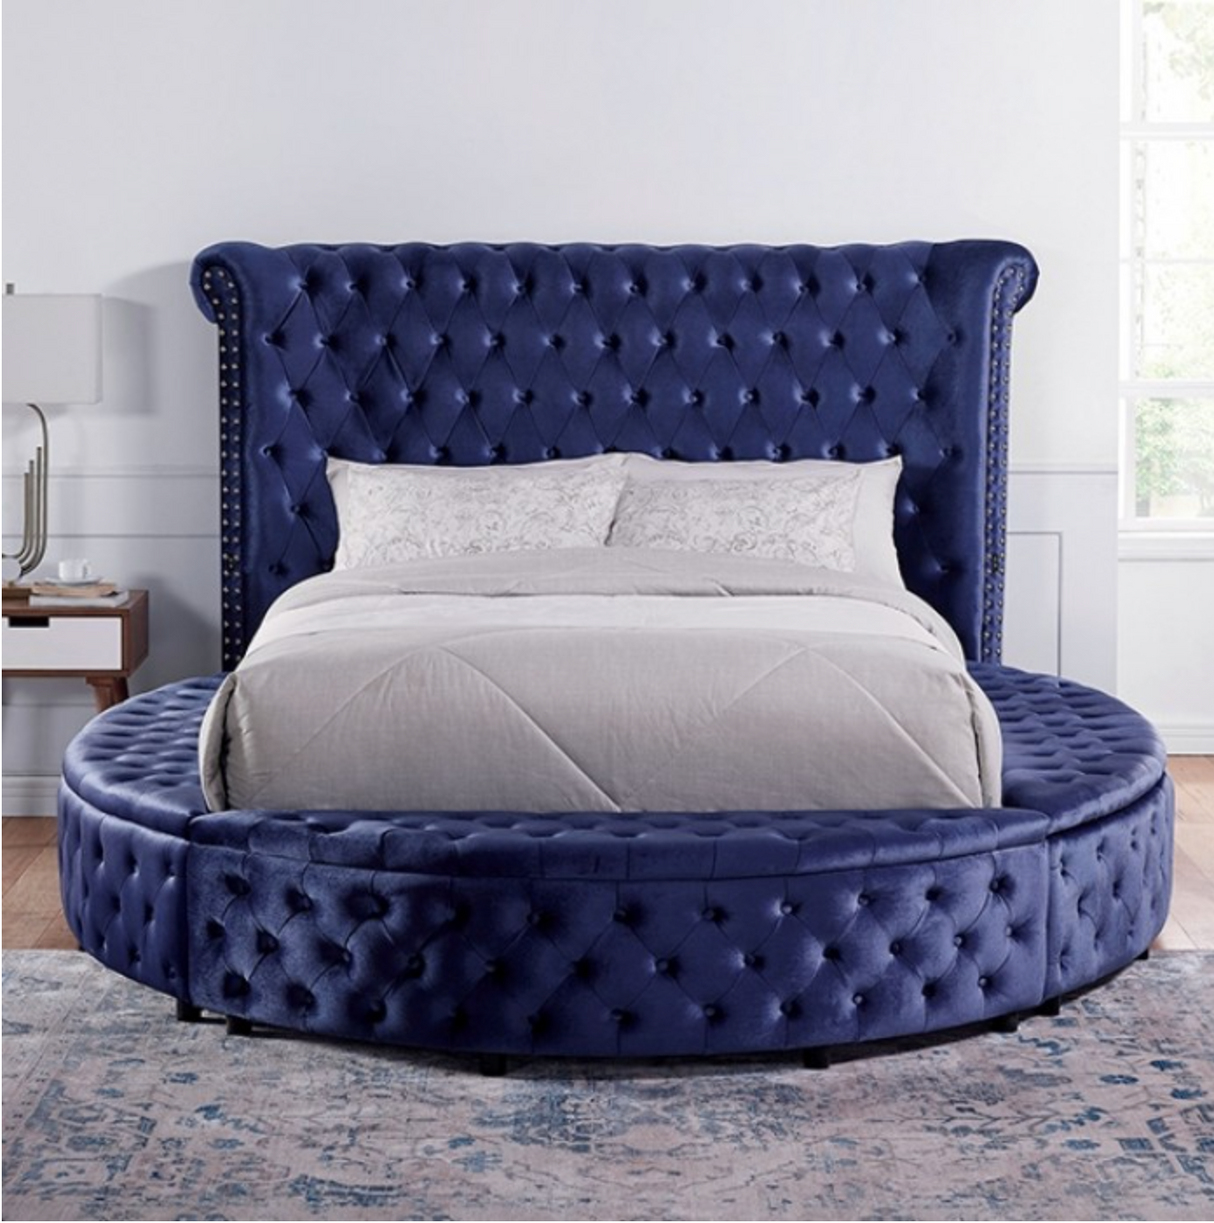 Sansom - California King Bed - Blue